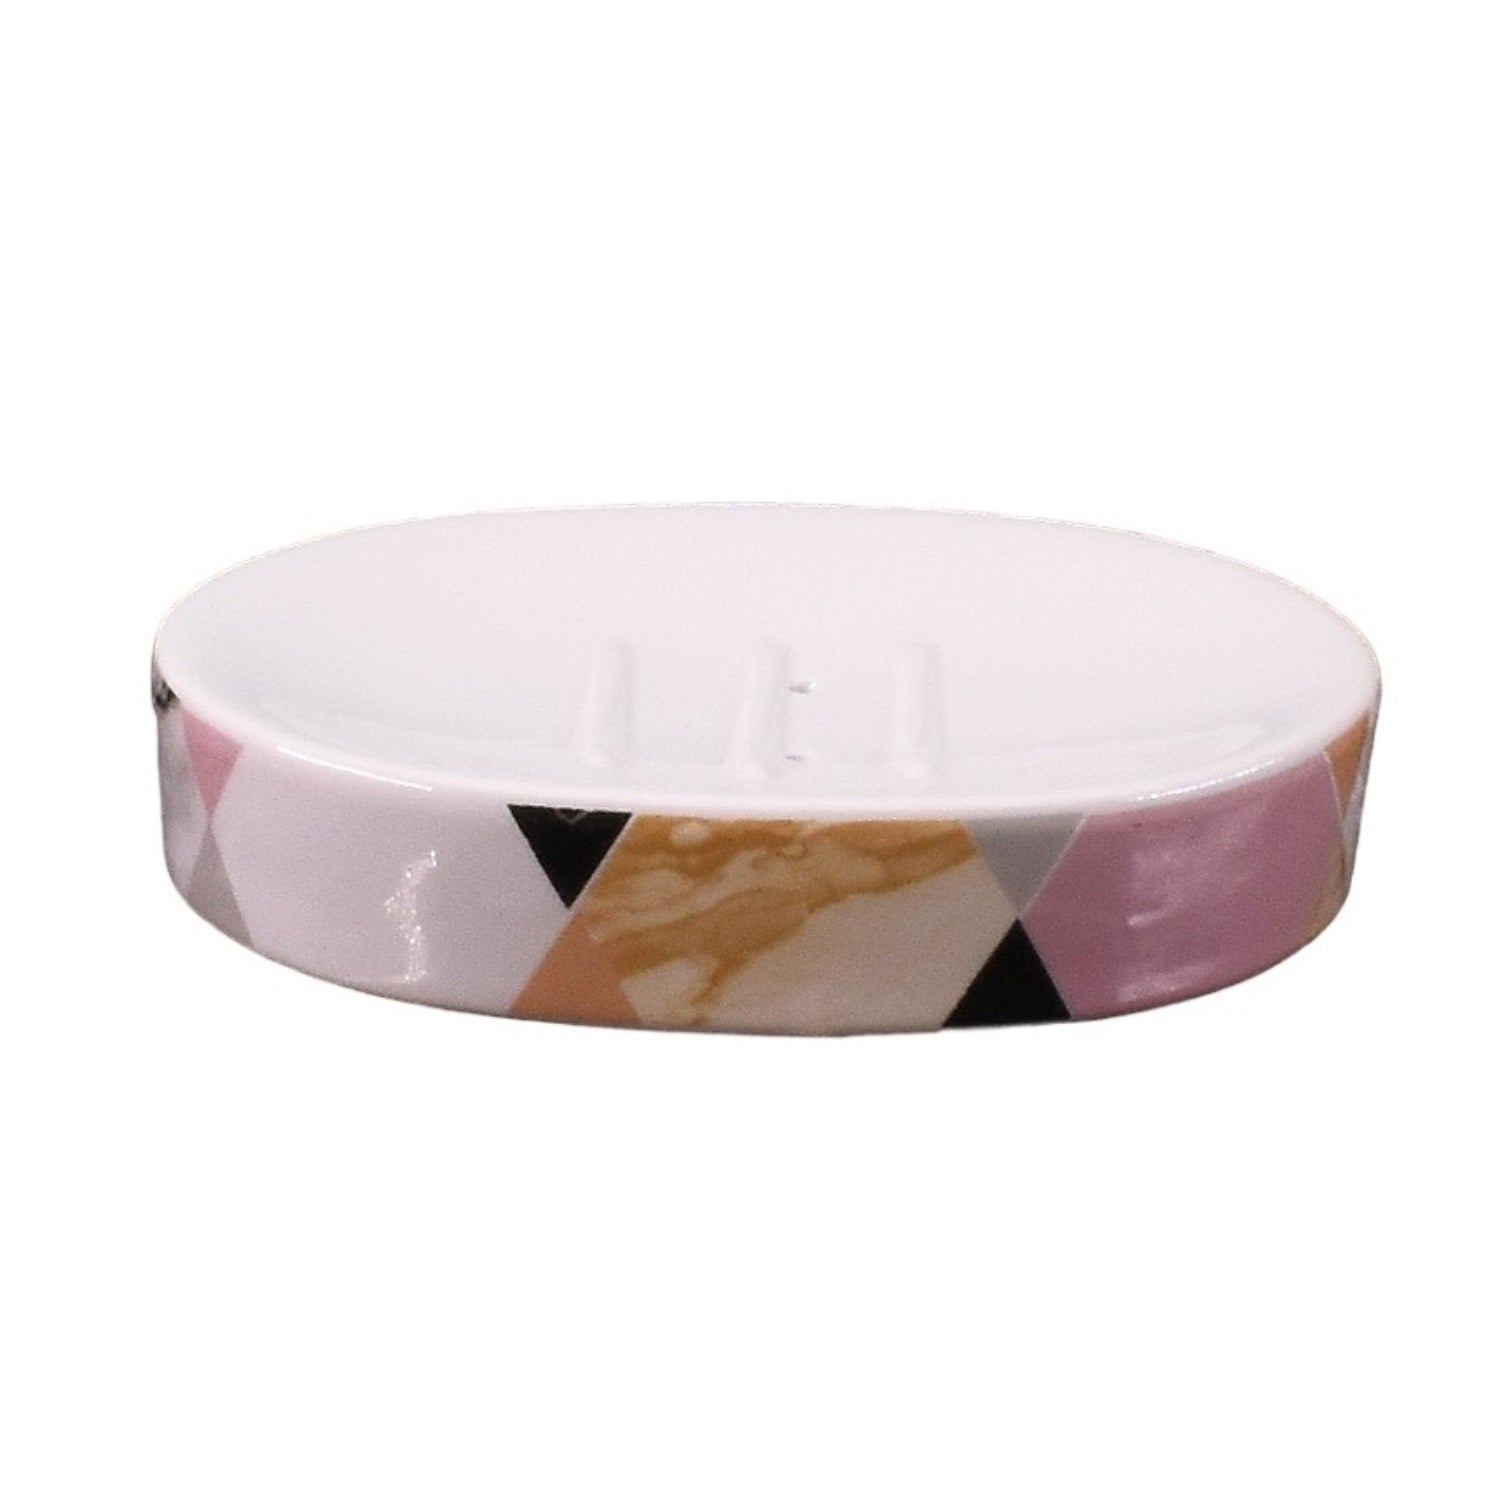 Ceramic Soap Dish Set of 1 Bathroom Accessories for Home (C1013)